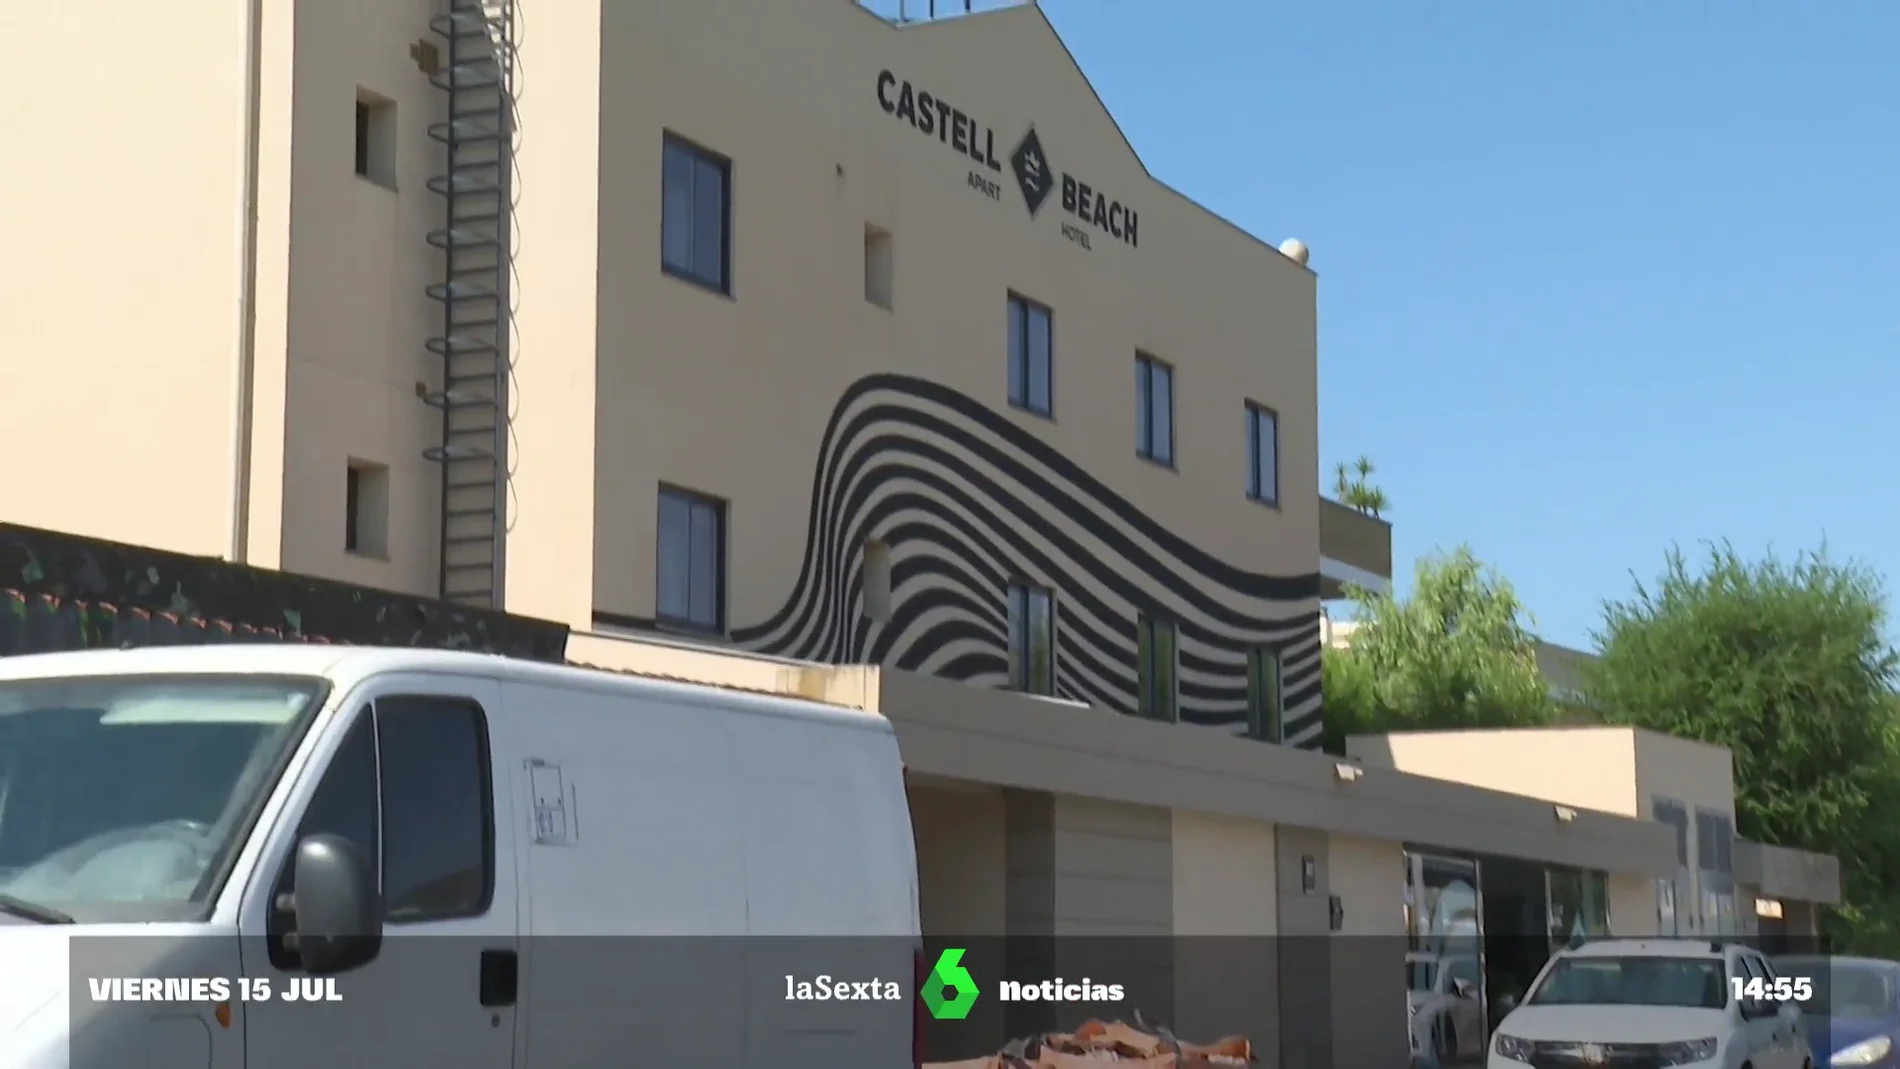 Imagen del hotel de Castelldefels donde se produjo un tiroteo